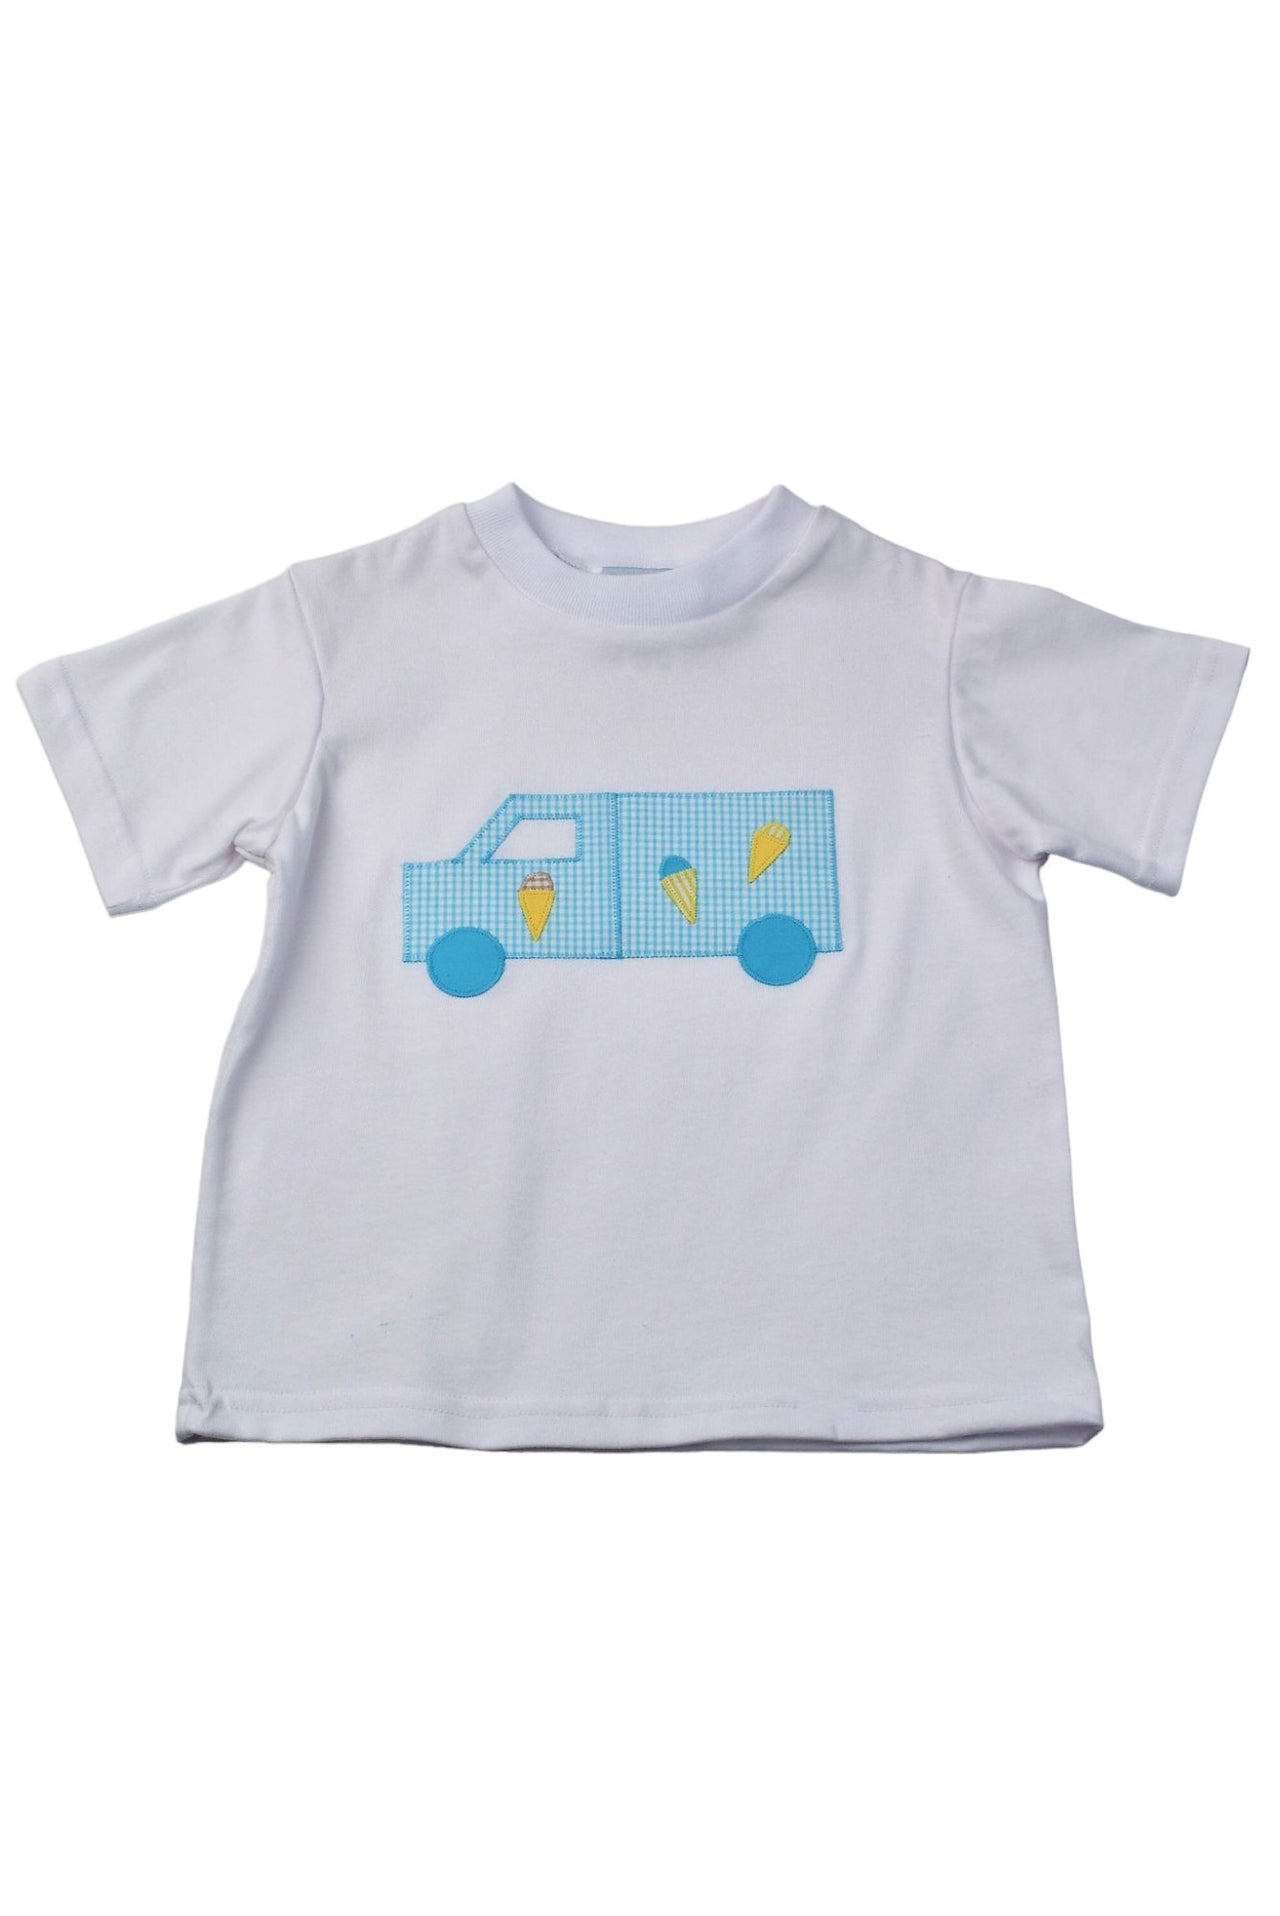 Funtasia Too Ice Cream Truck Tee shirt & Aqua Shorts 69800/69825 5103